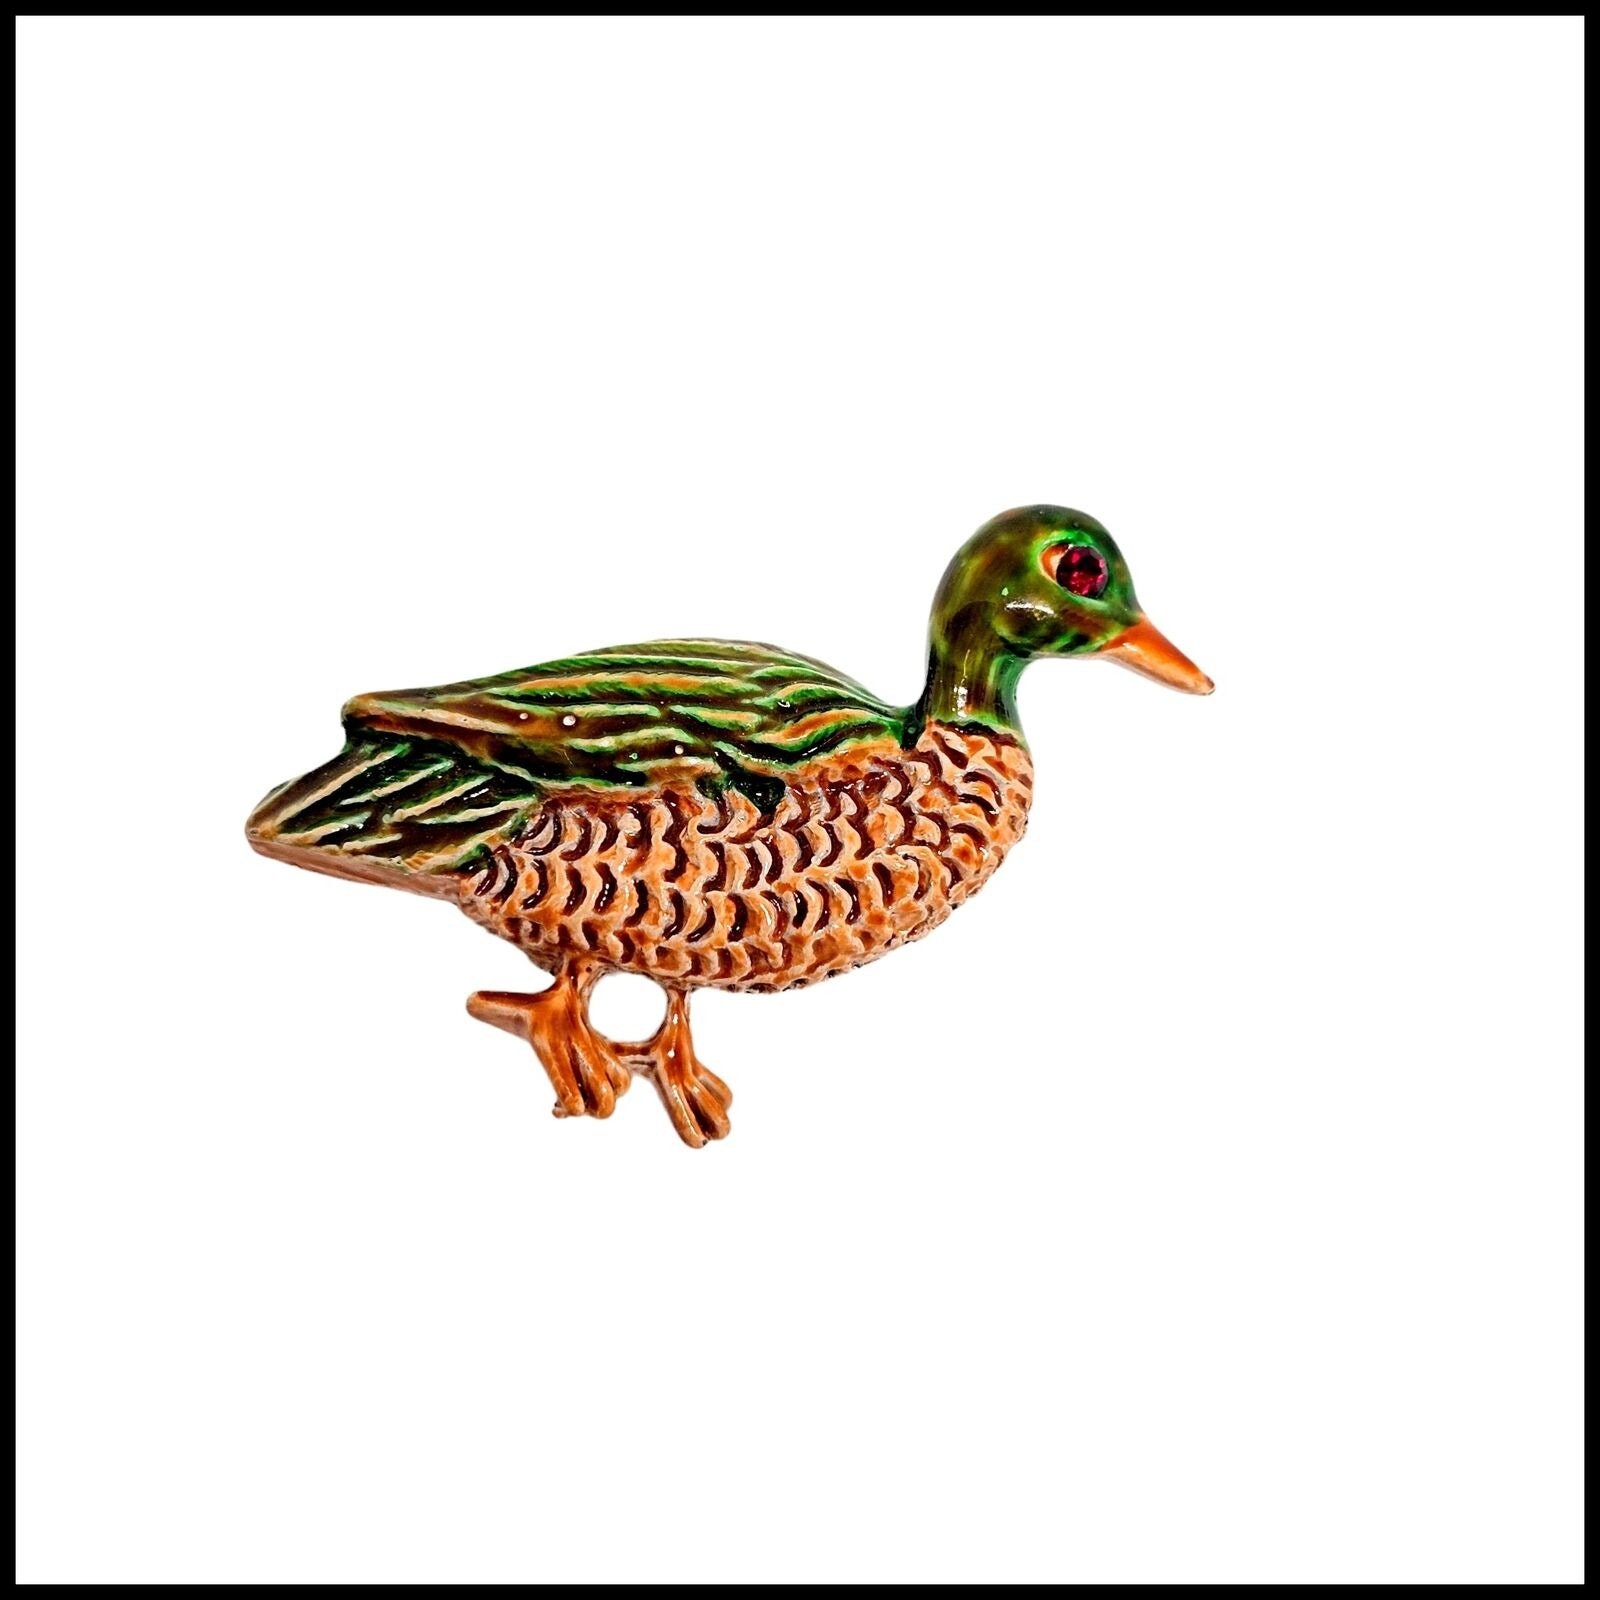 Vintage 1960s Pair of Duck Pins Marked Gerrys Enamel Mallard